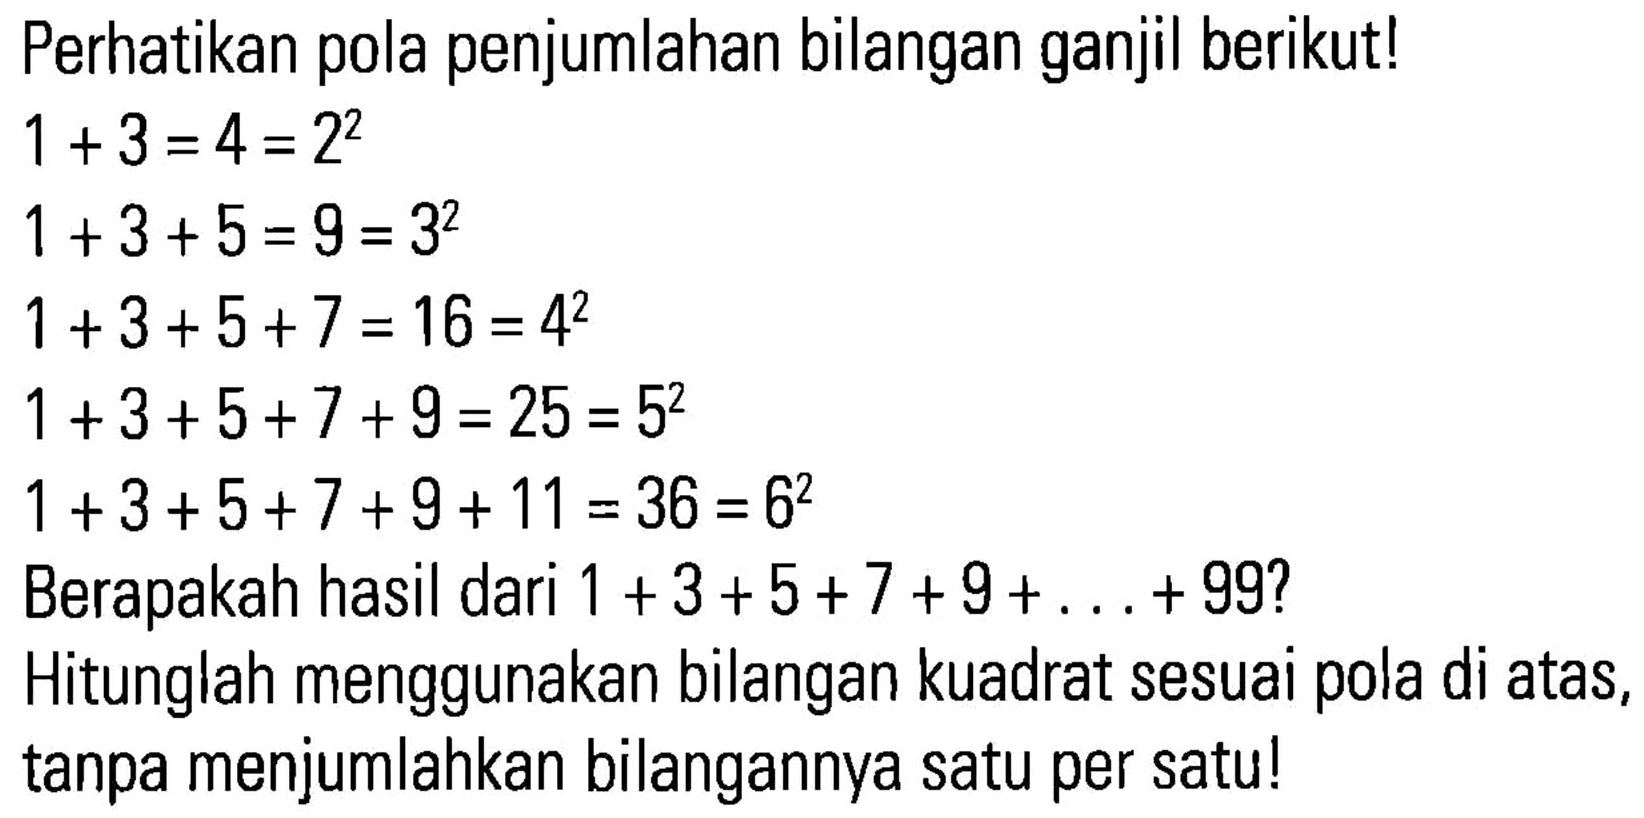 Perhatikan pola penjumlahan bilangan ganjil berikut! 1 + 3 = 4 = 2^2 1 + 3 + 5 = 9 = 3^2 1 + 3 + 5 + 7 = 16 = 4^2 1 + 3 + 5 + 7 + 9 = 25 = 5^2 1 + 3 + 5 + 7 + 9 + 11 = 36 = 6^2 Berapakah hasil dari 1 + 3 + 5 + 7 + 9 + . . . + 99? Hitunglah menggunakan bilangan kuadrat sesuai pola di atas, tanpa menjumlahkan bilangannya satu per satu!